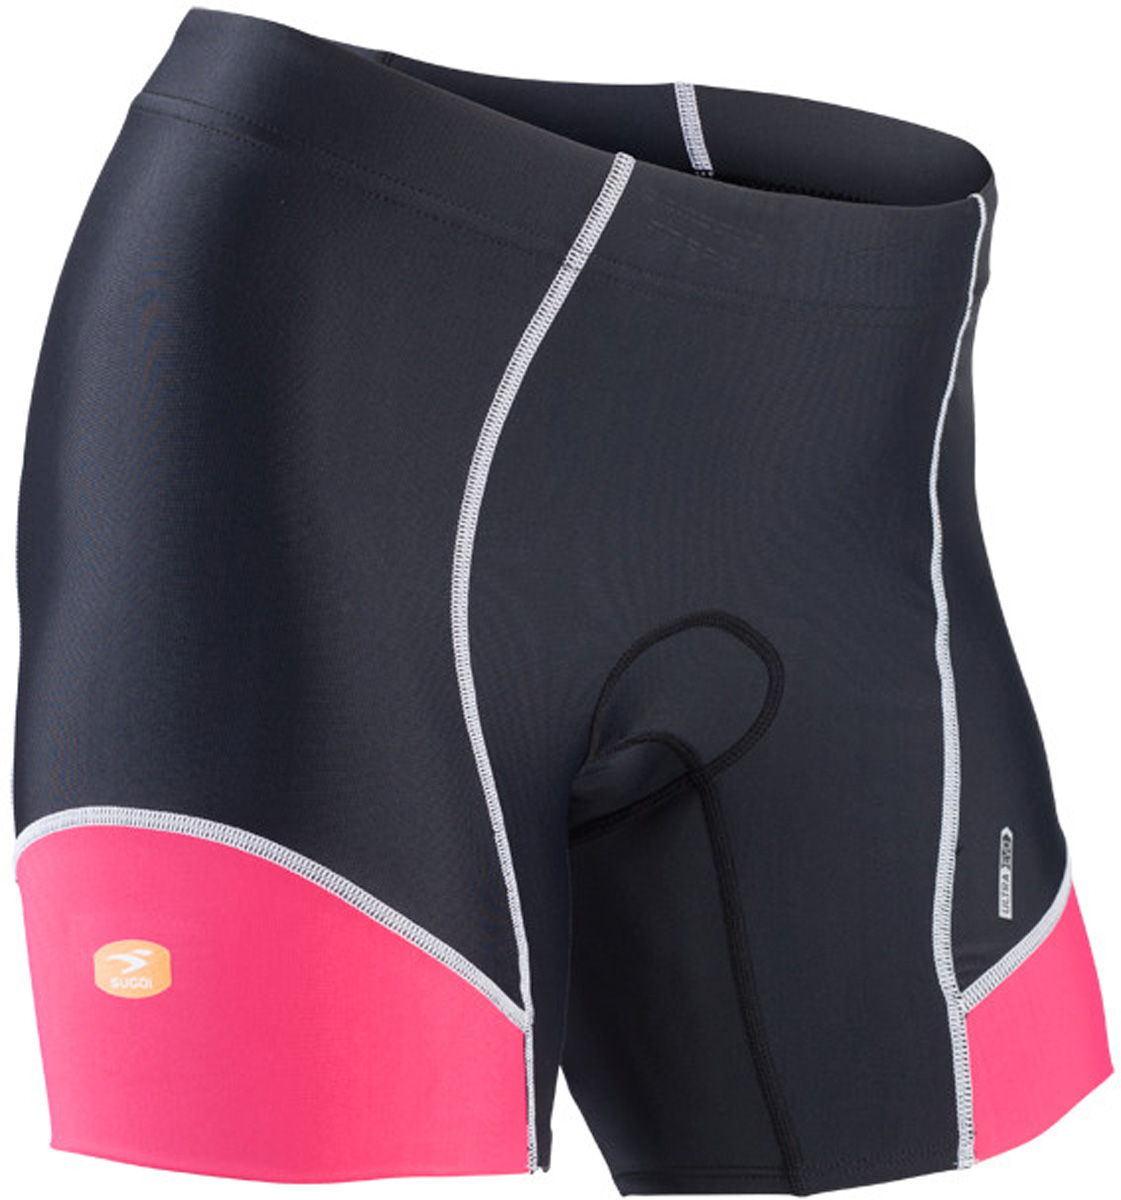 Sugoi Bike Shorts Size Chart